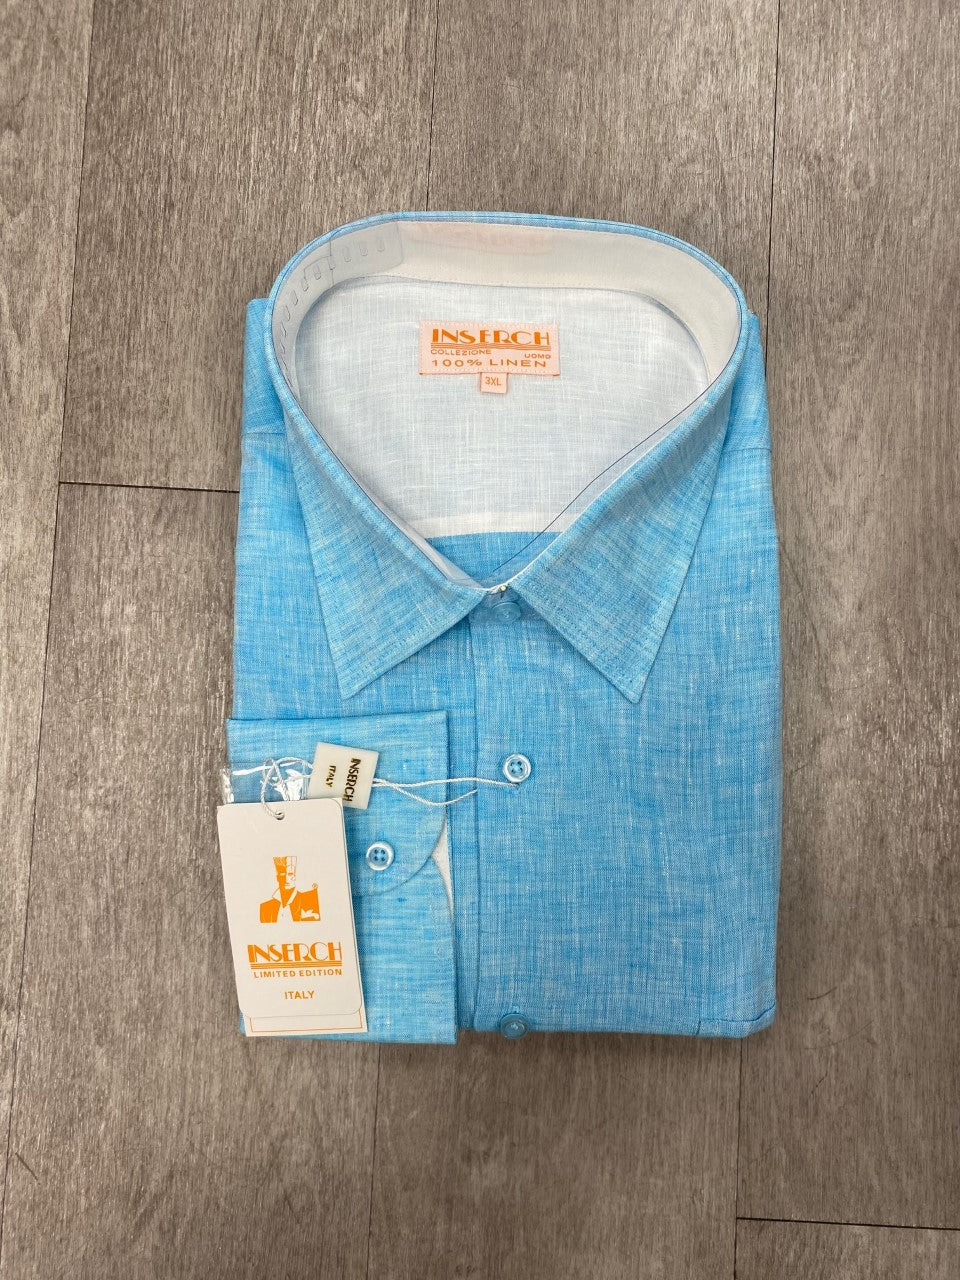 Inserch Premium Linen Yarn-Dye Solid Long Sleeve Shirt 24116-92 Ice Blue